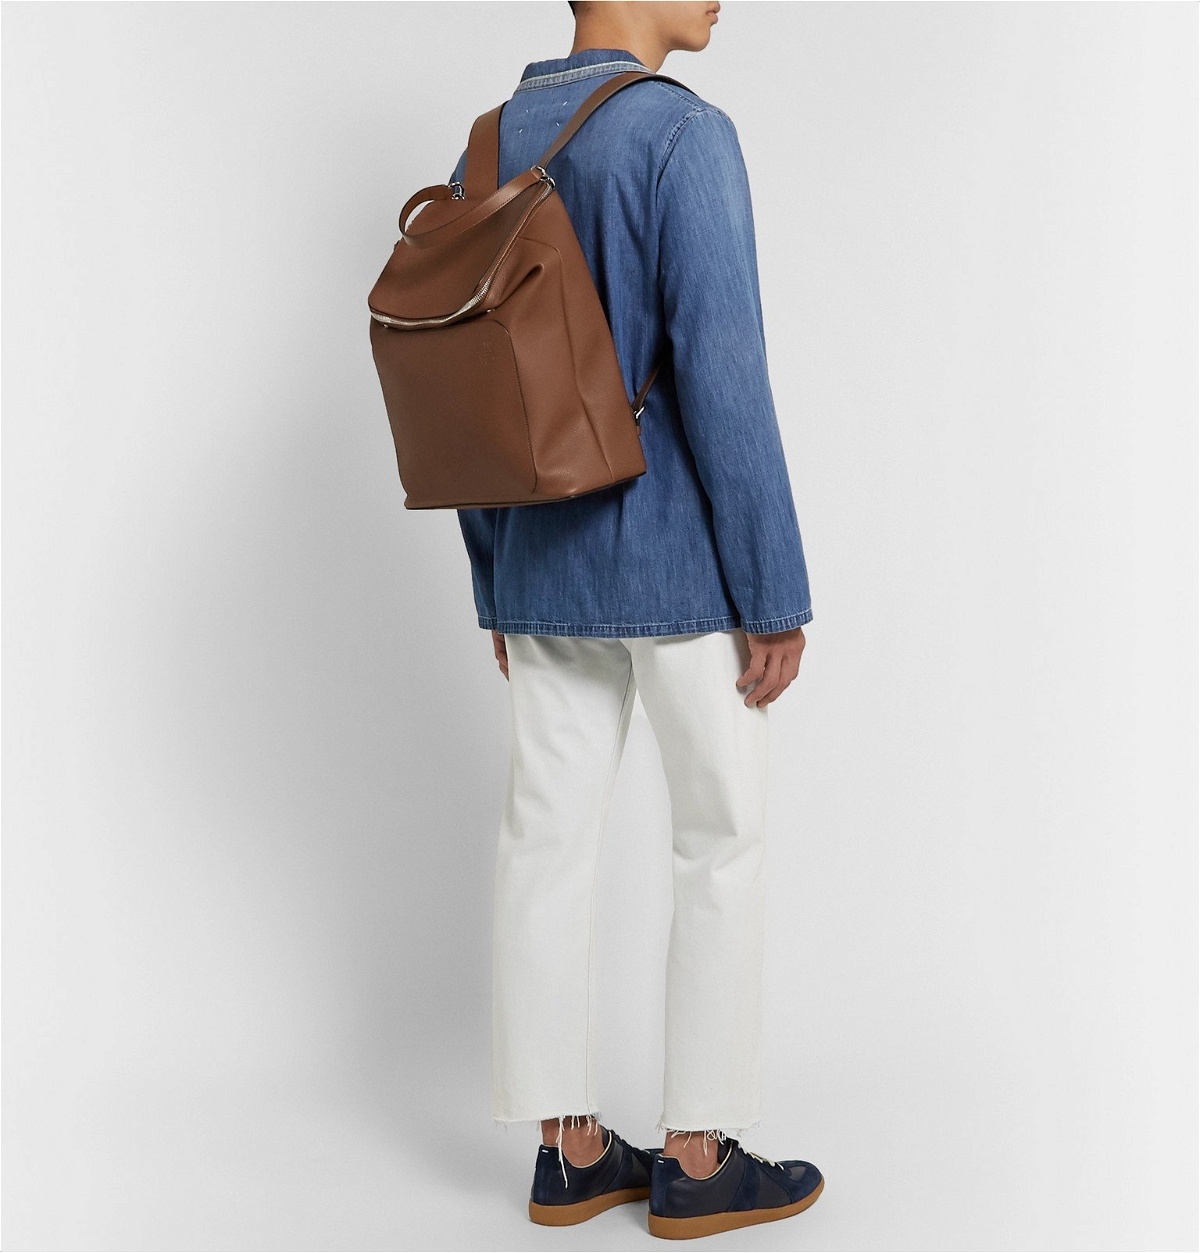 Goya leather backpack Loewe Beige in Leather - 36573988